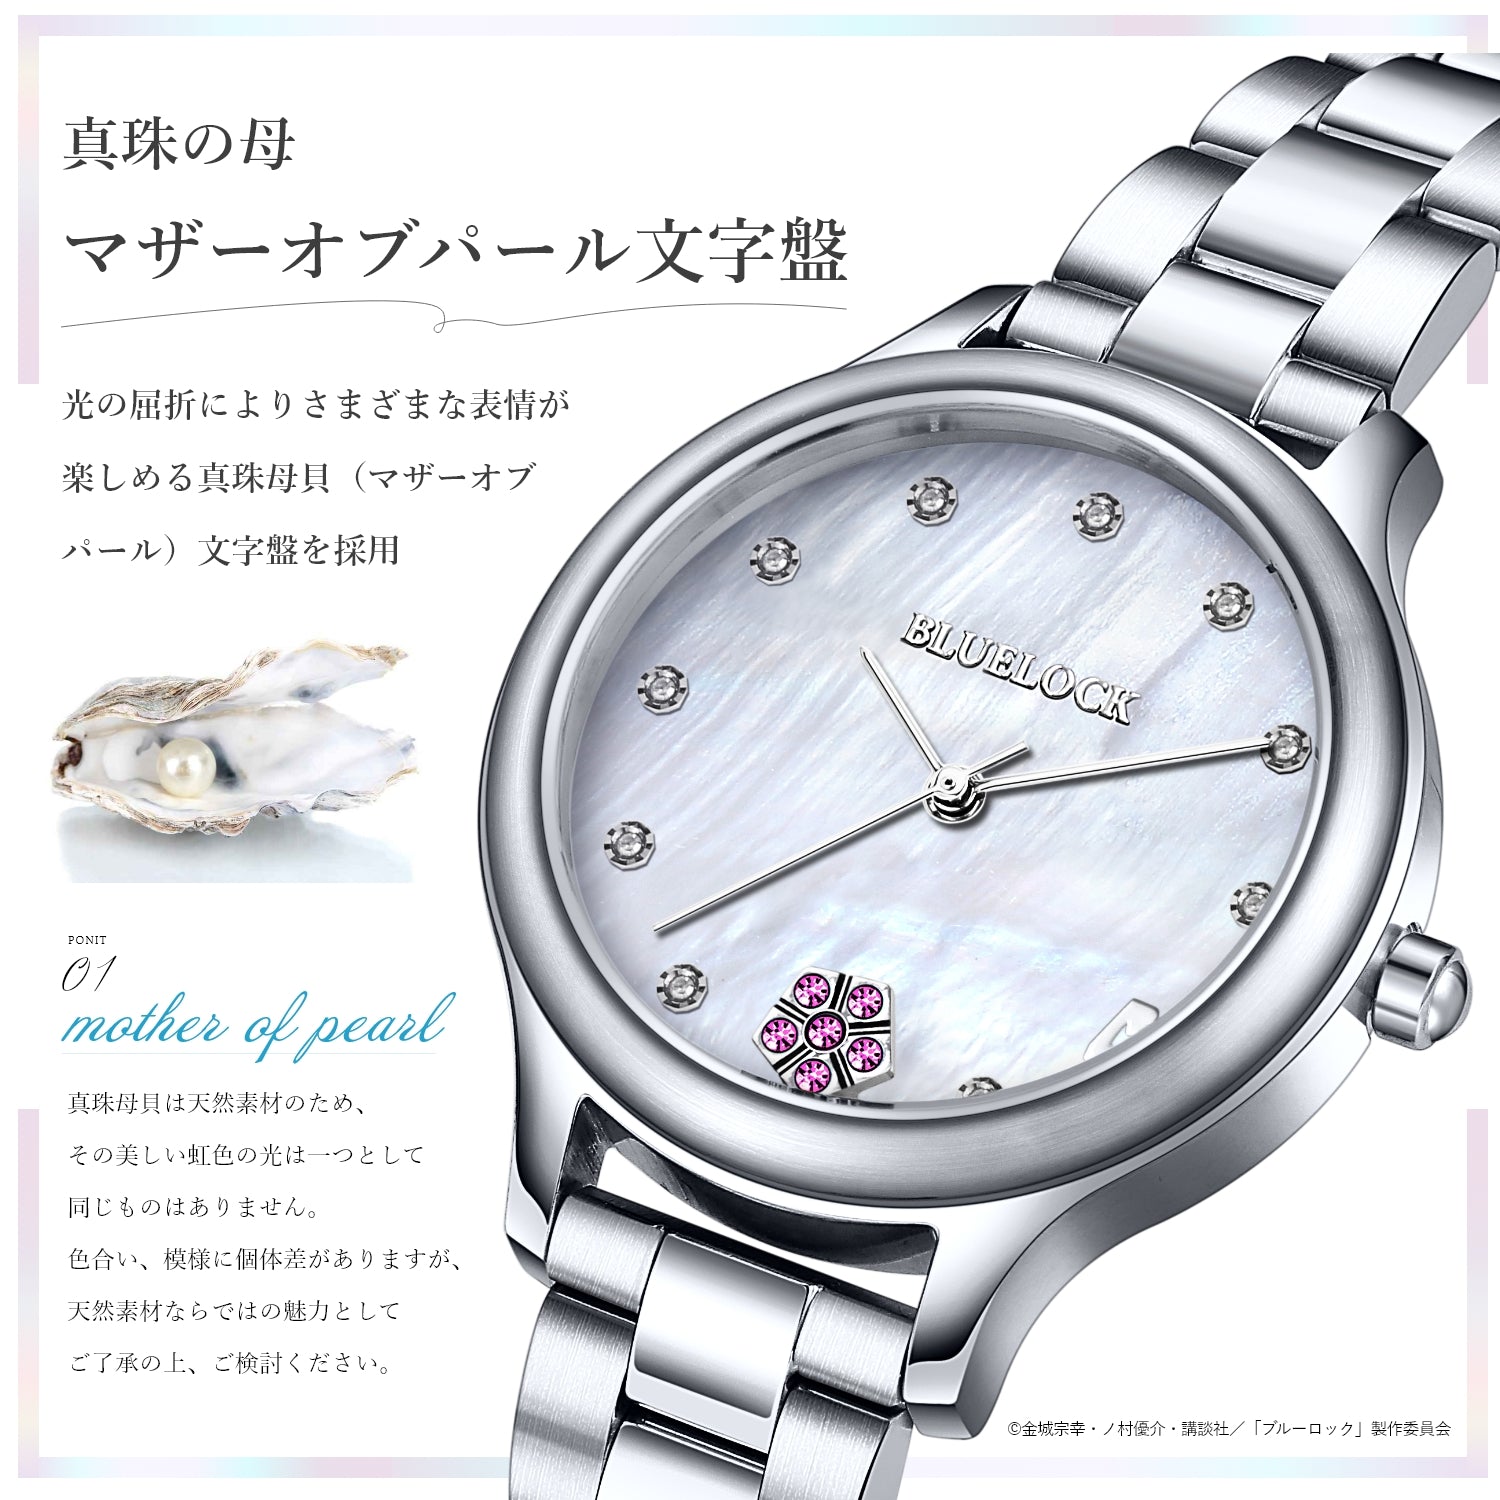 TV anime"BLUELOCK"Moving Jewelry wristwatch with Natural Diamonds Hyoma Chigiri